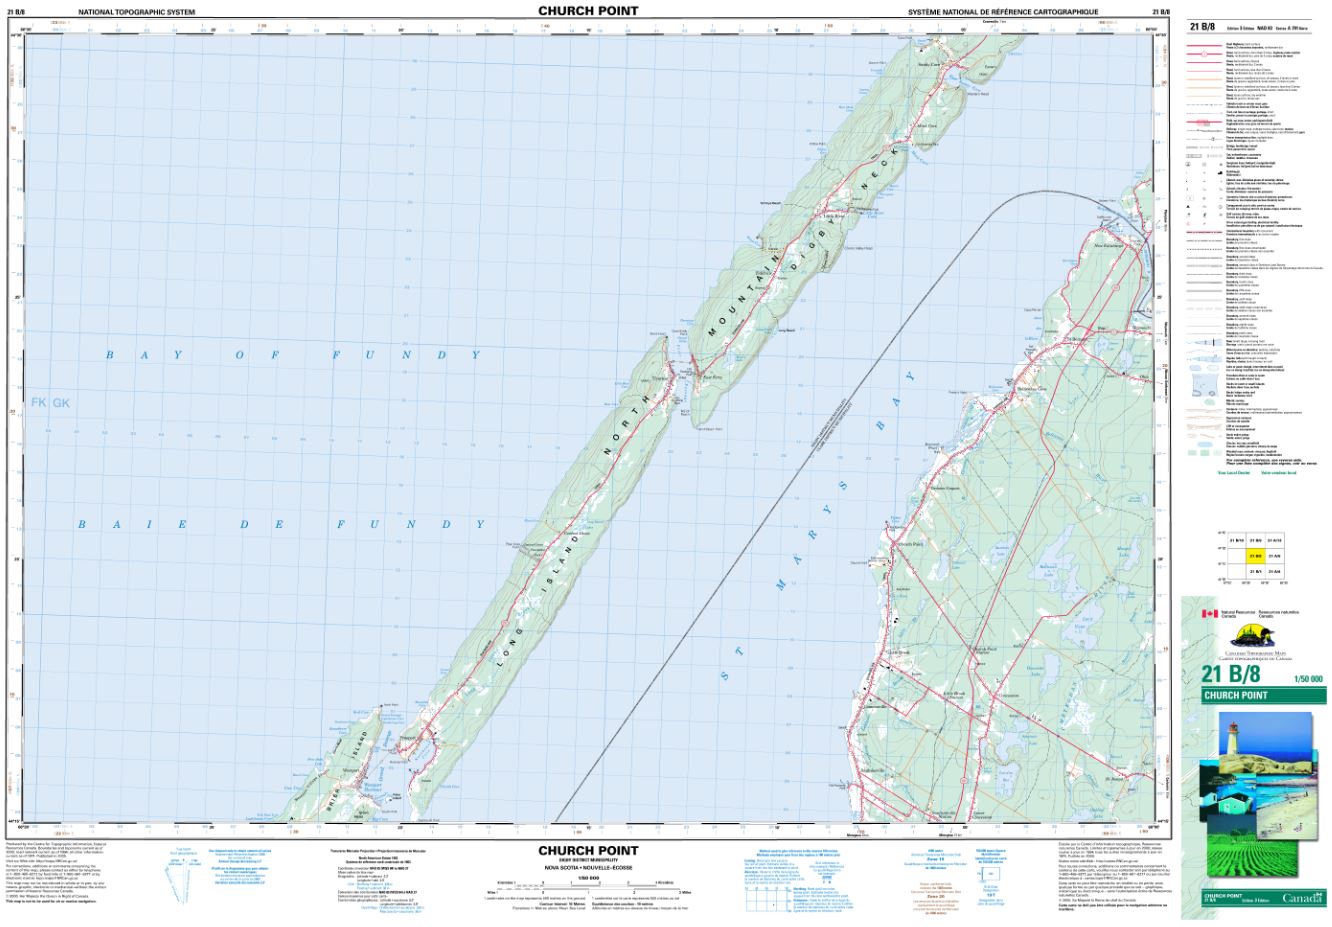 21B/08 Church Point Topographic Map Nova Scotia